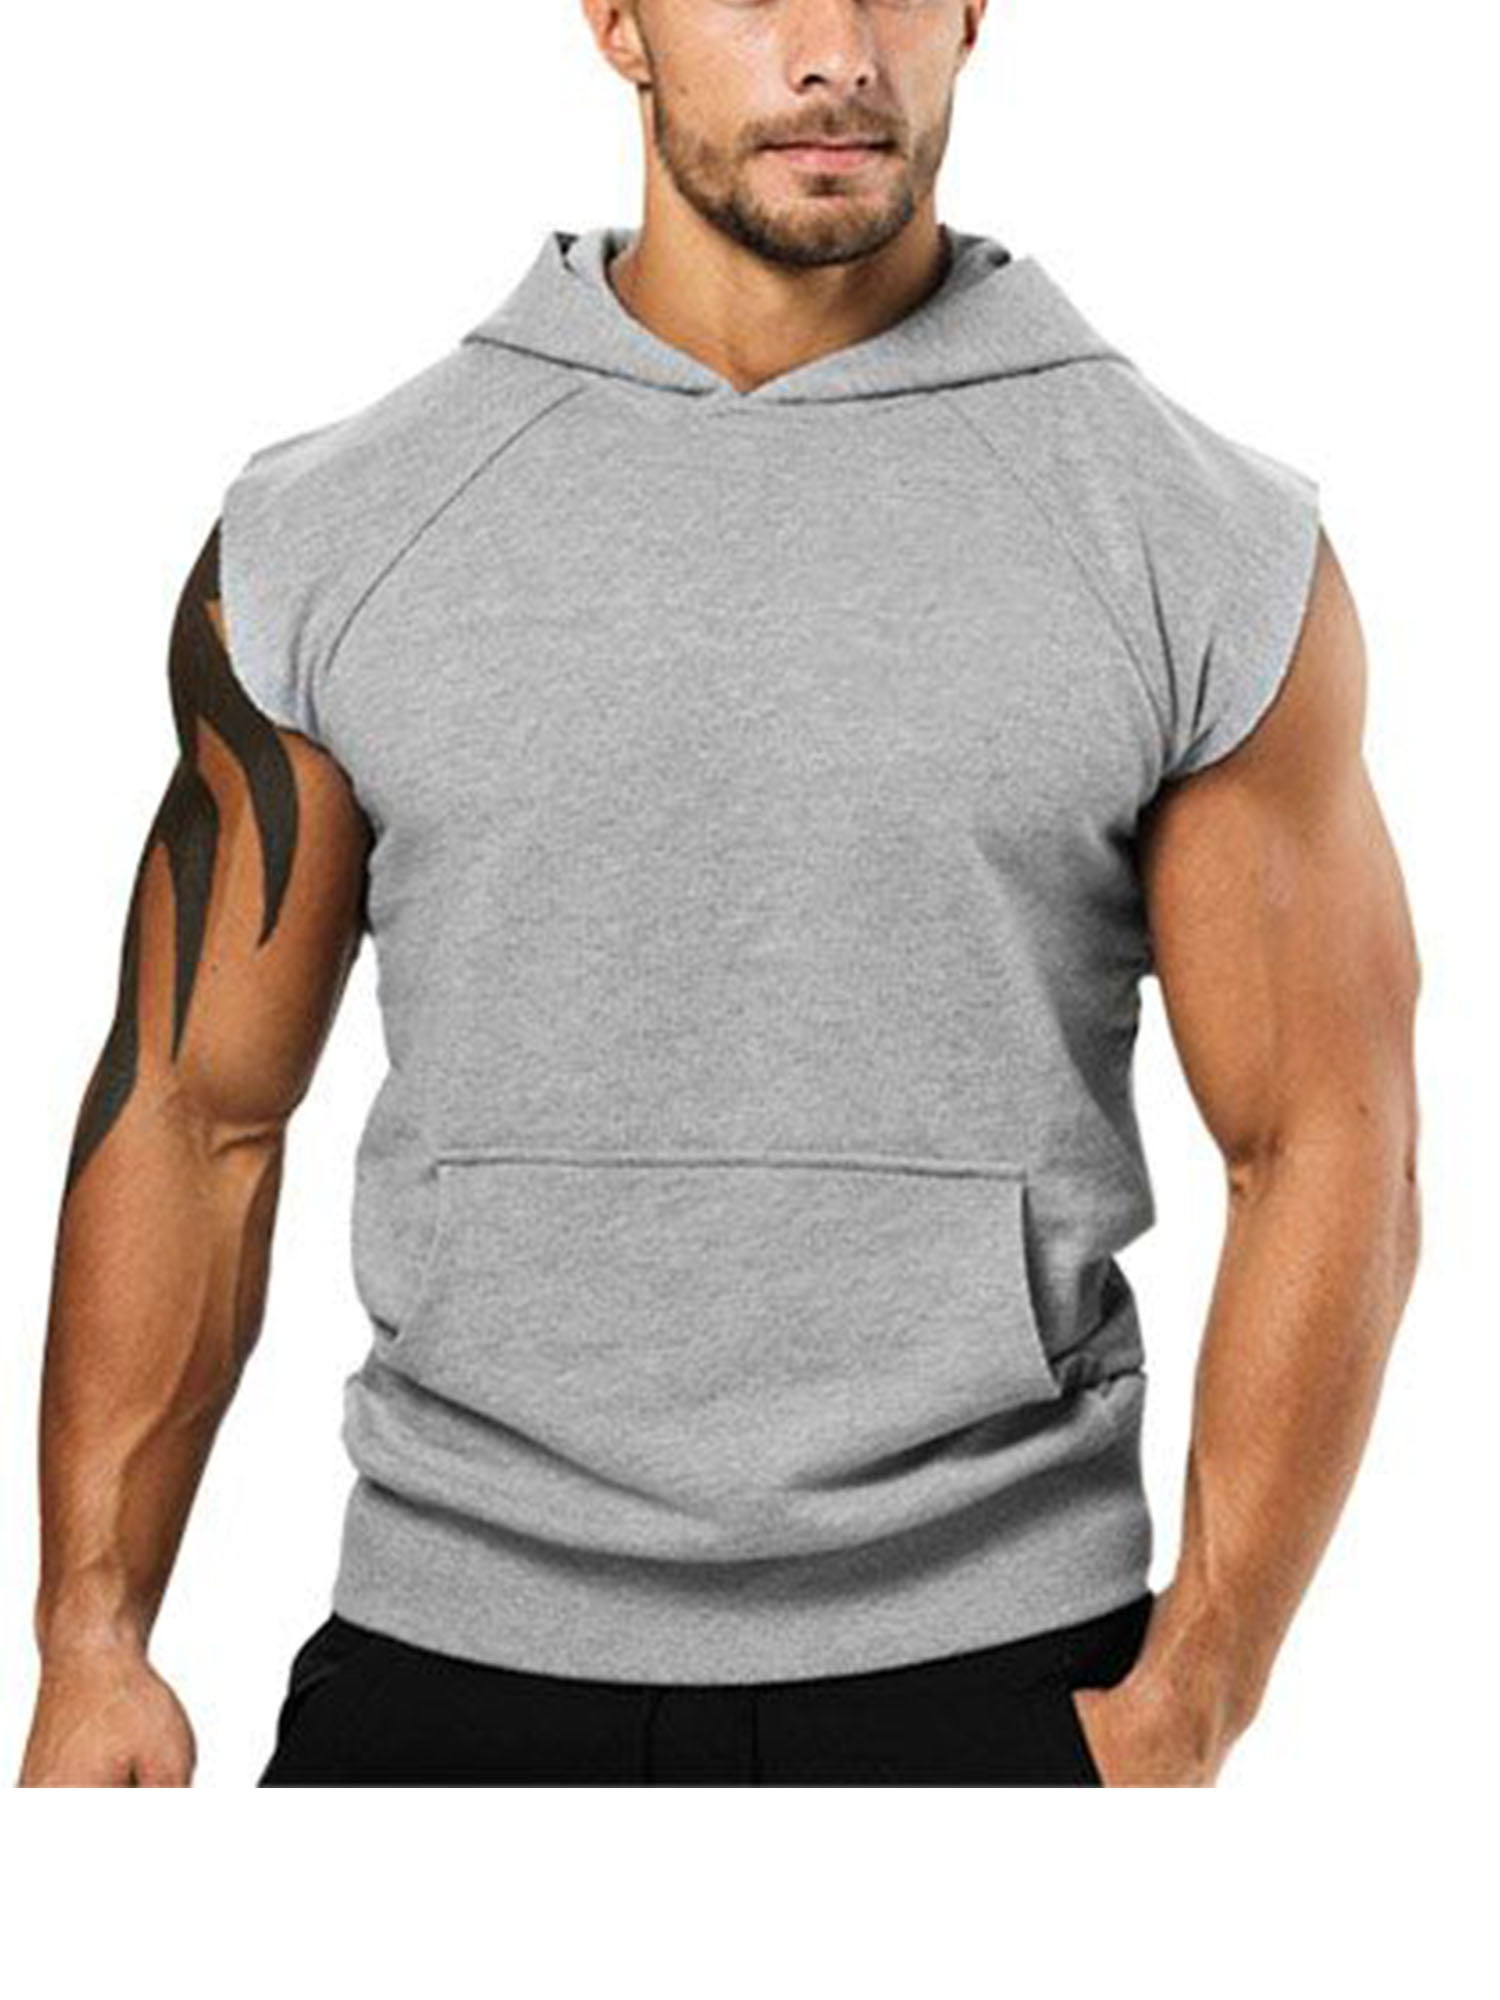 Mens Vest Plain Sleeveless Tank Top Summer Training Gym Sports Muscle T Shirt